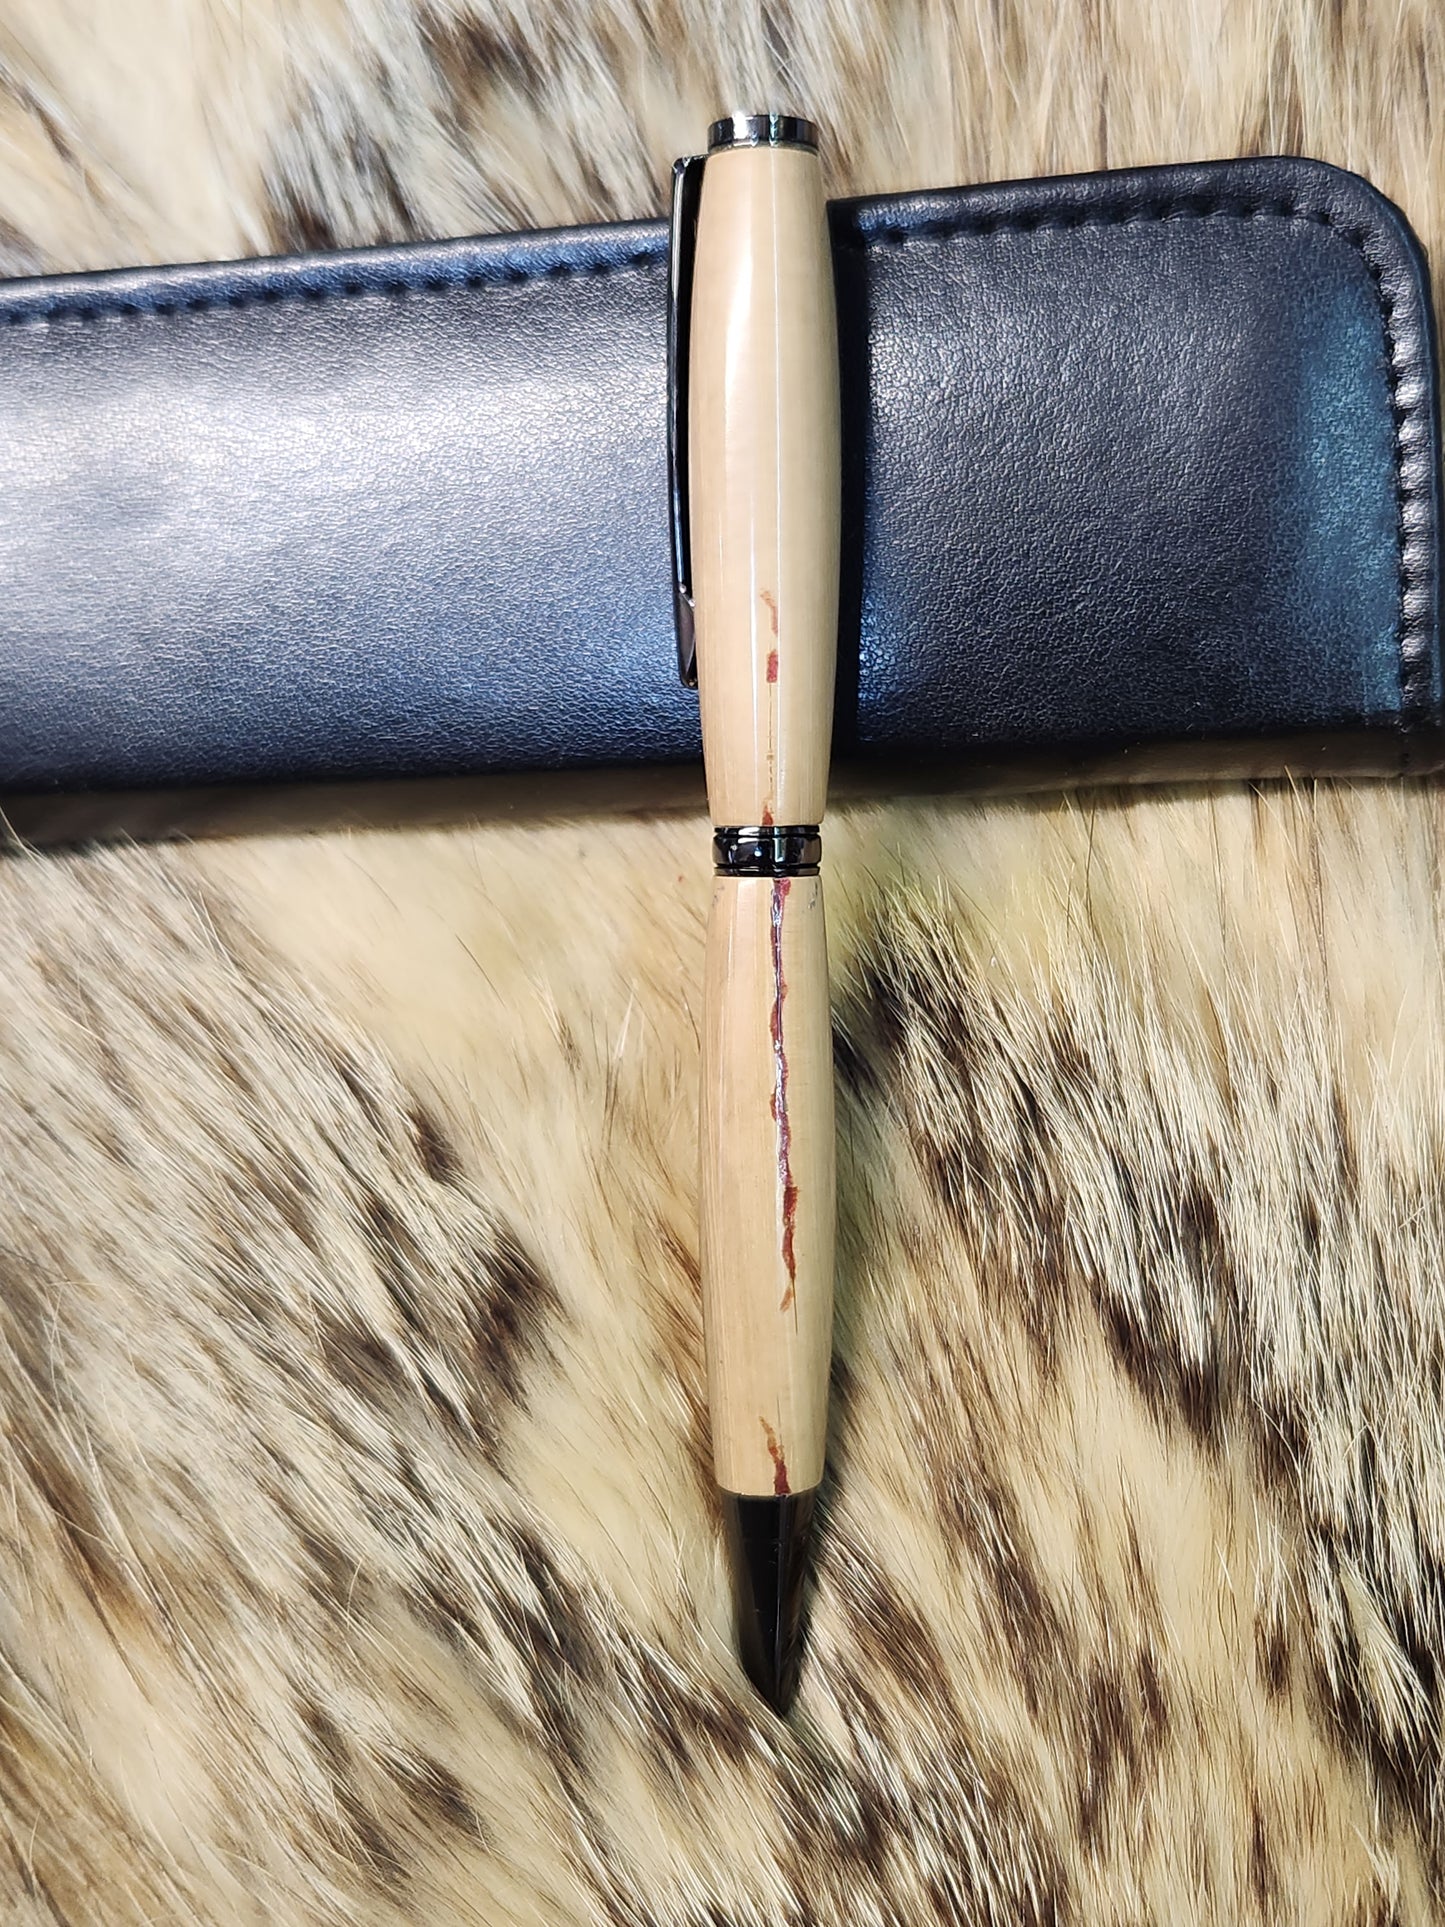 Mammoth ivory cross style pen